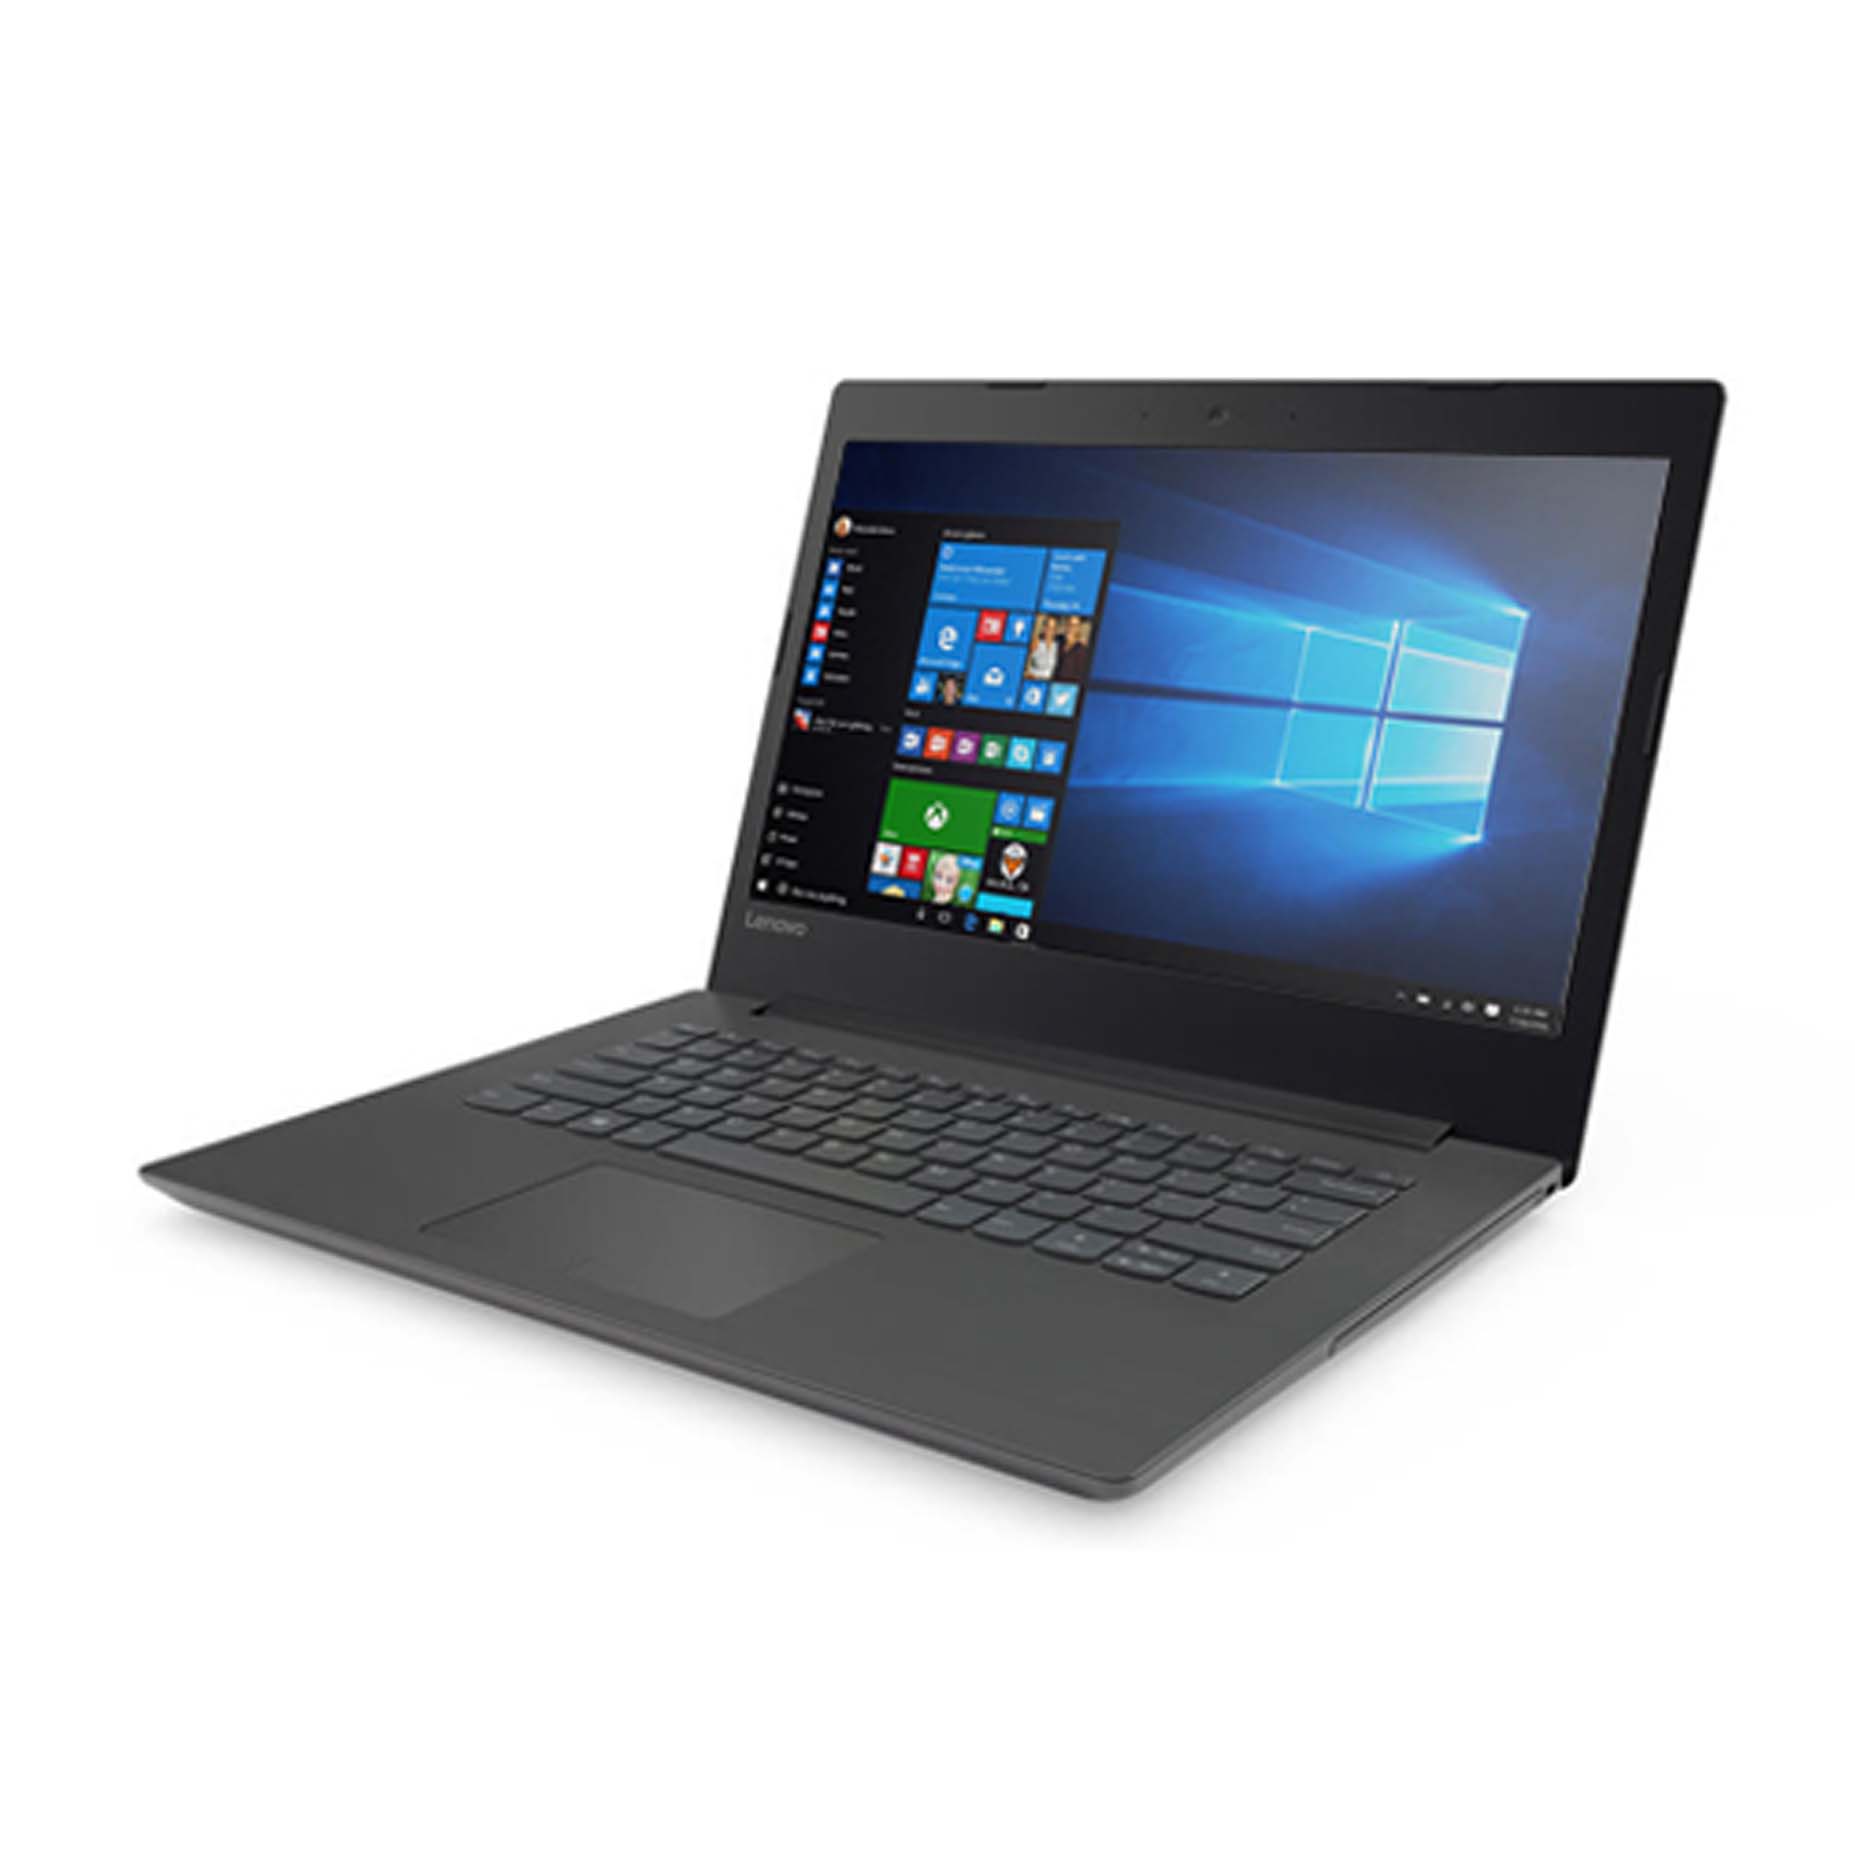 Harga Lenovo IP320-14ISK 7WID Laptop Intel Core i3-6006U 4GB 1TB Integrated Windows 10 14 Inch Onyx Black